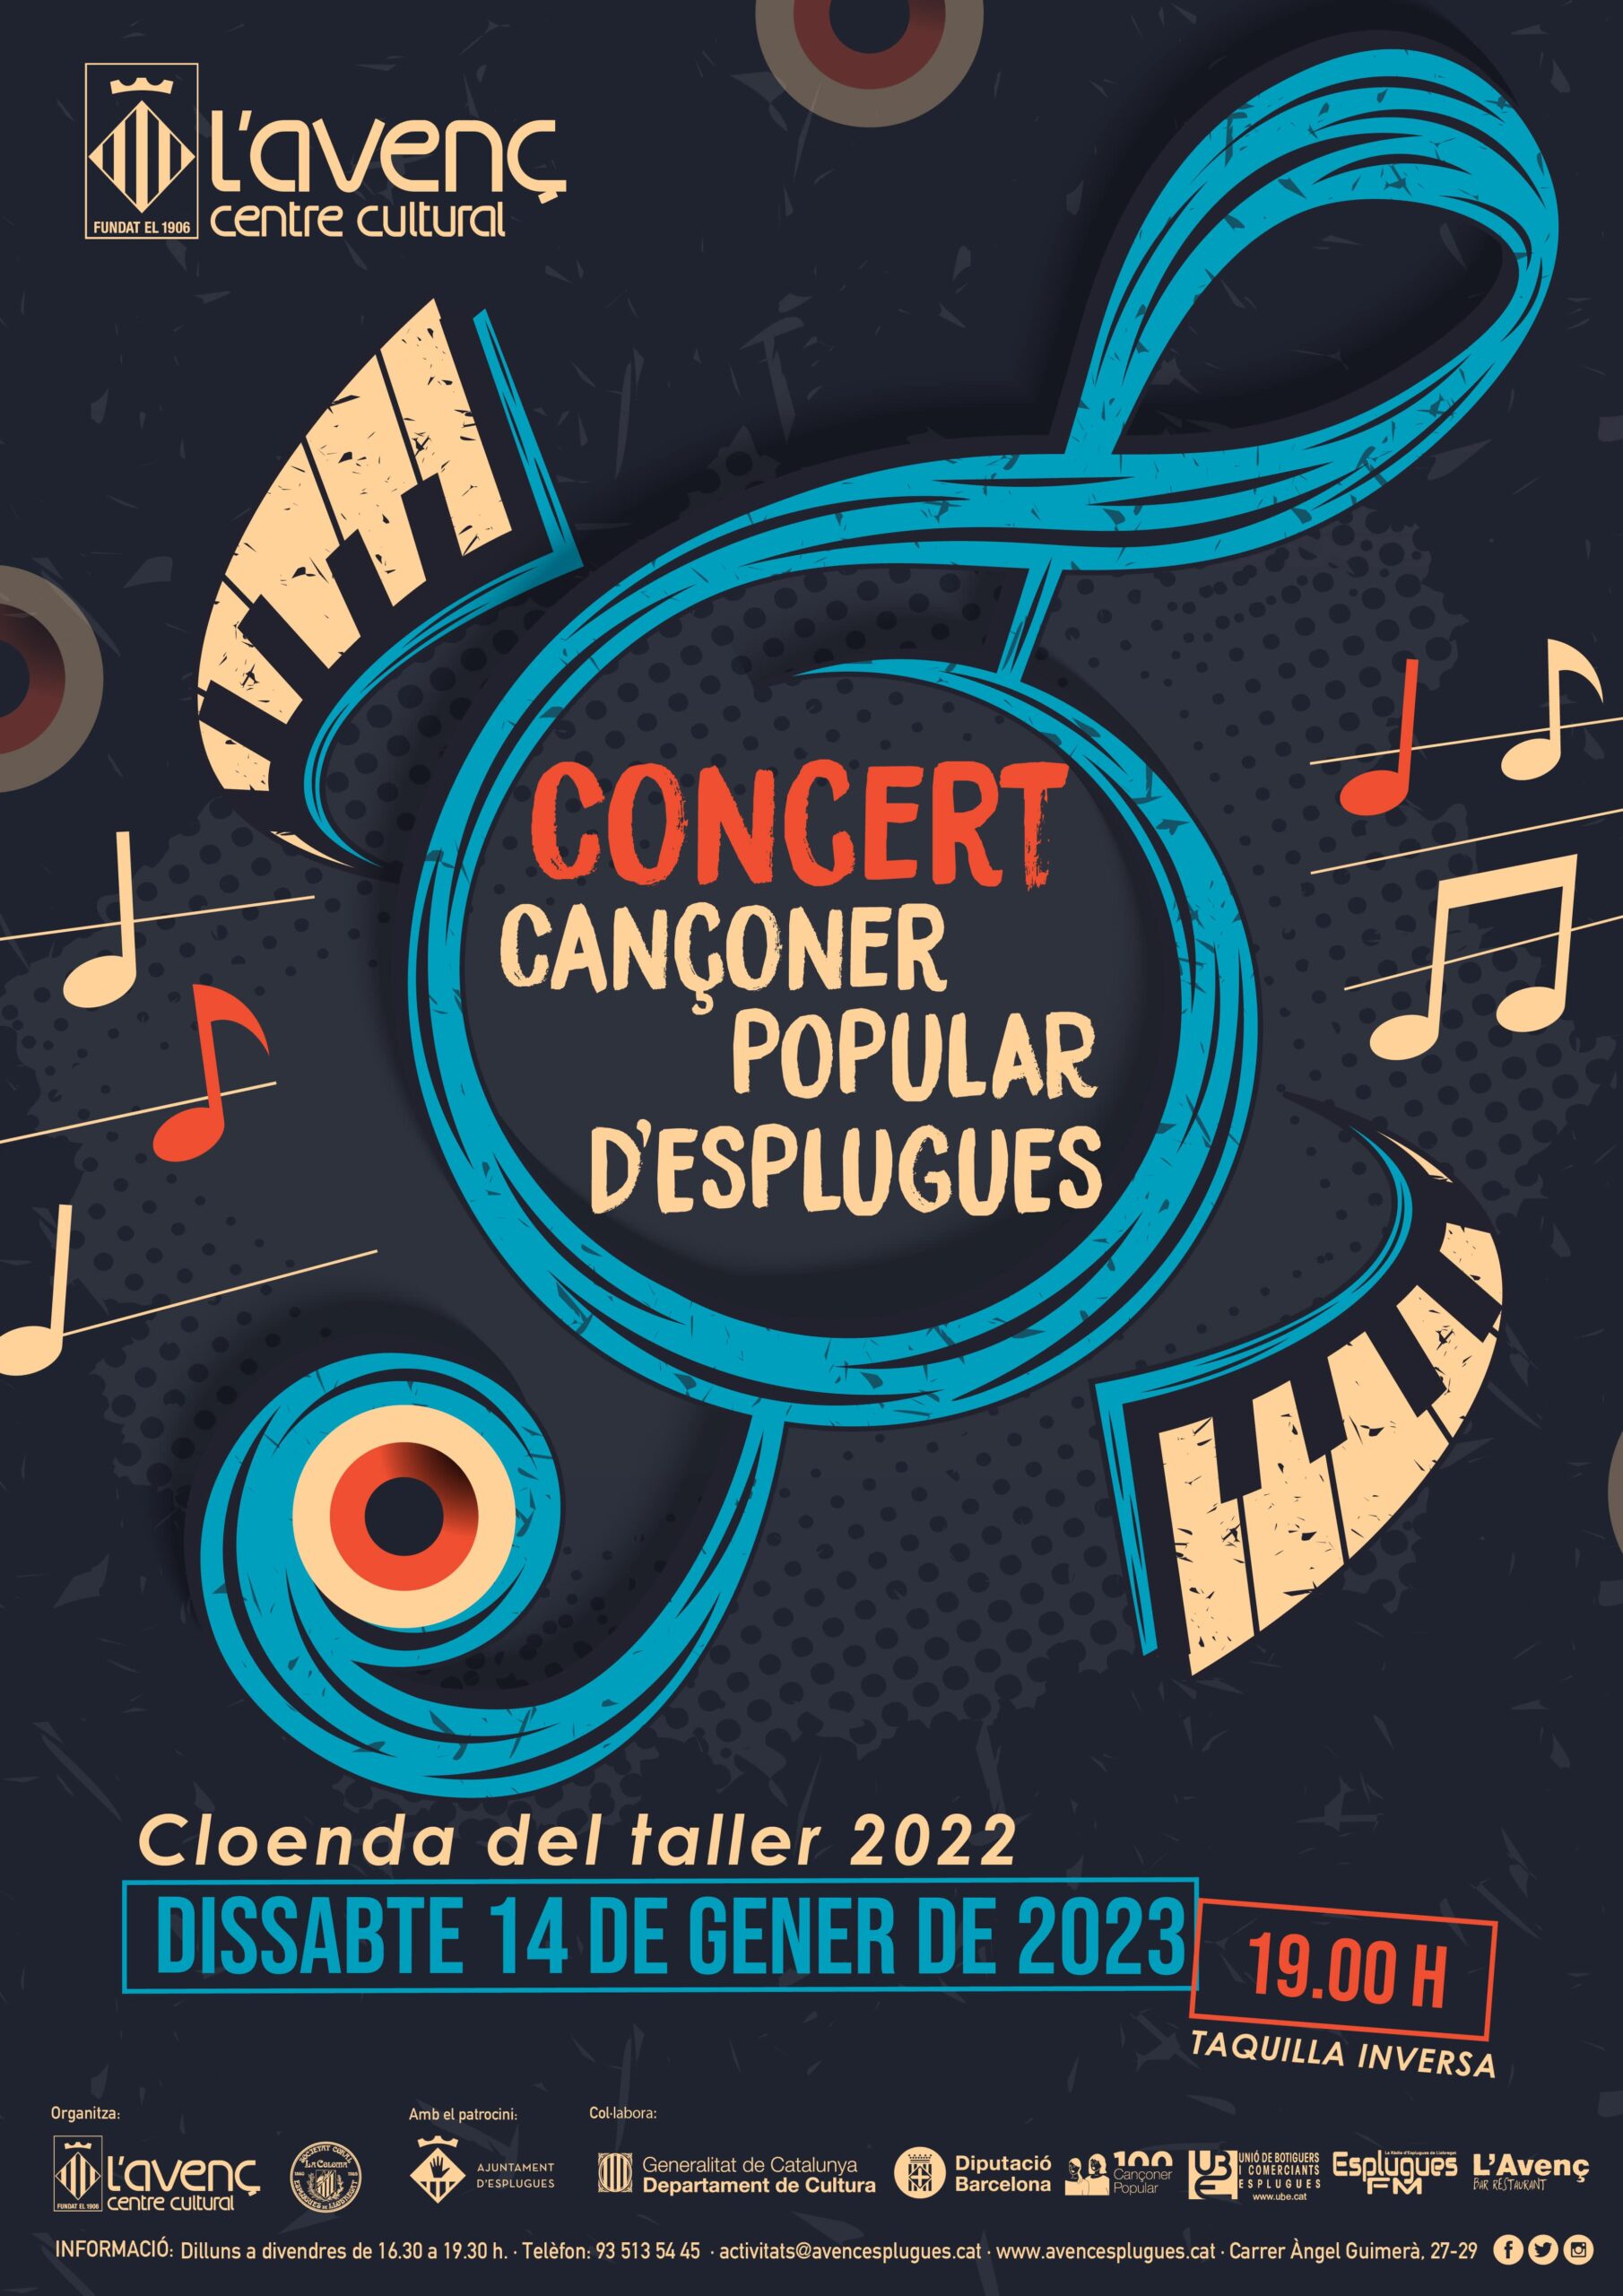 Cançoner concert